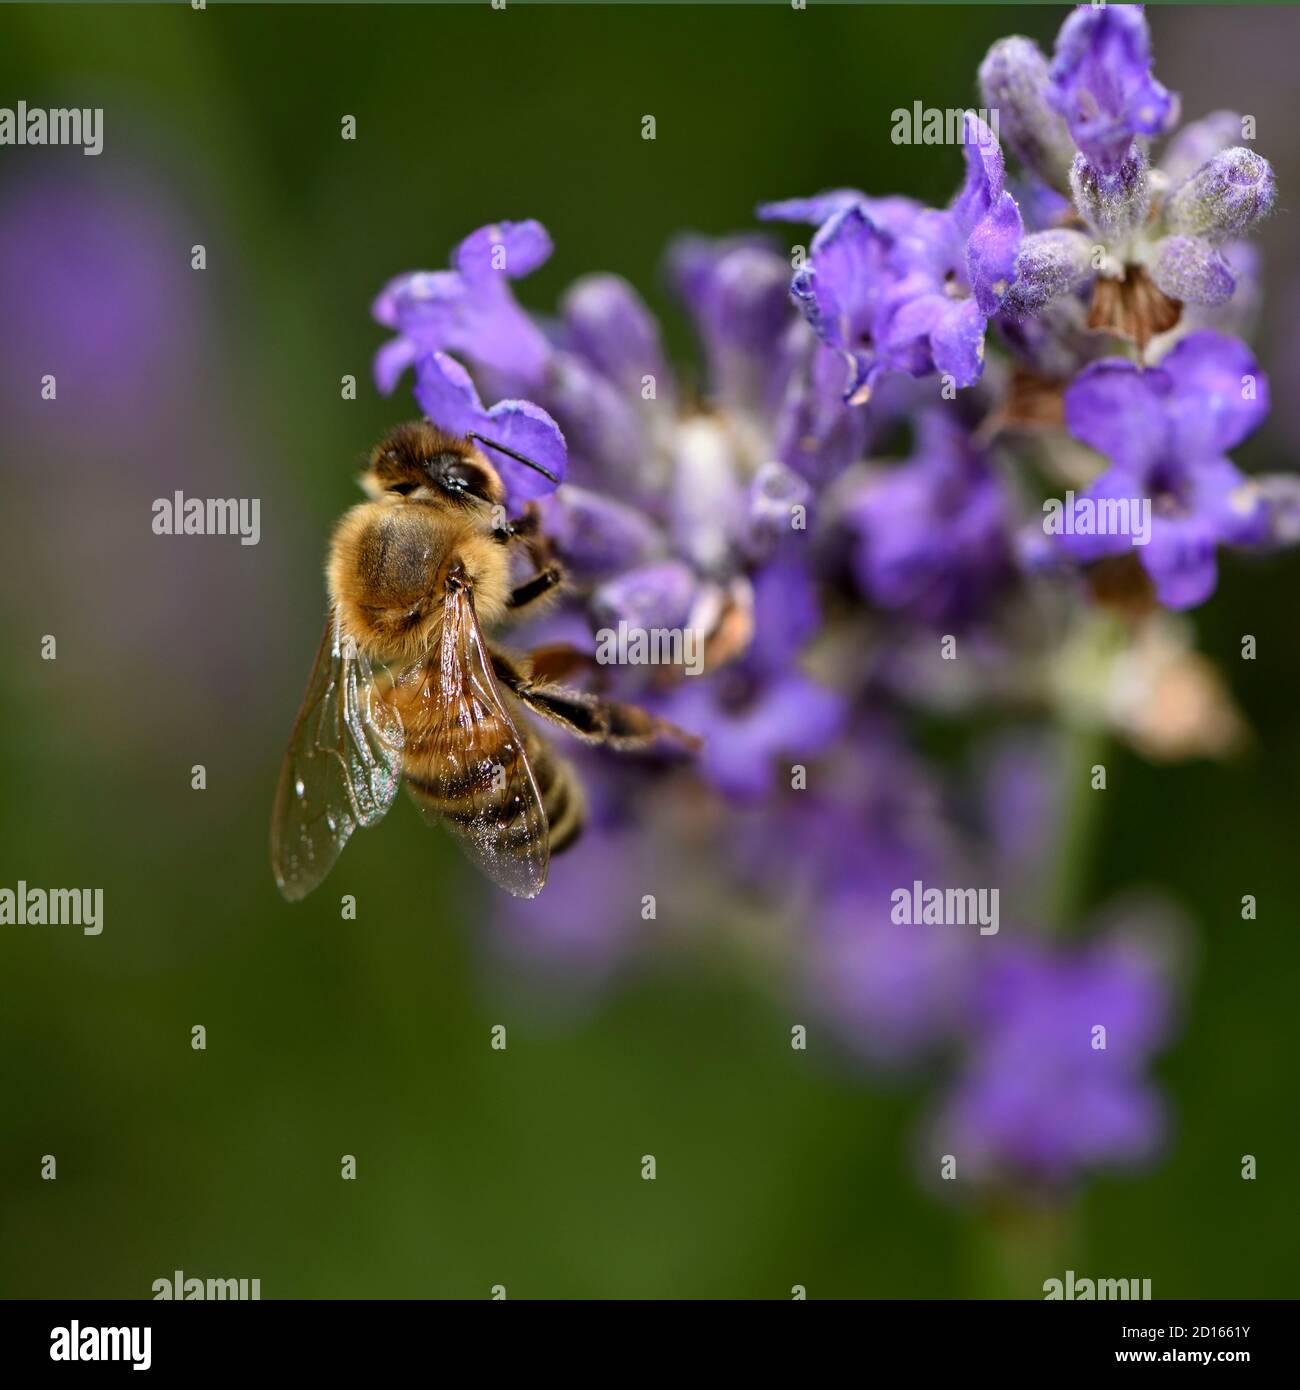 France, Territoire de Belfort, Belfort, garden, Bee (Apis mellifera) foraging on Lavandula x intermedia, flowers Stock Photo